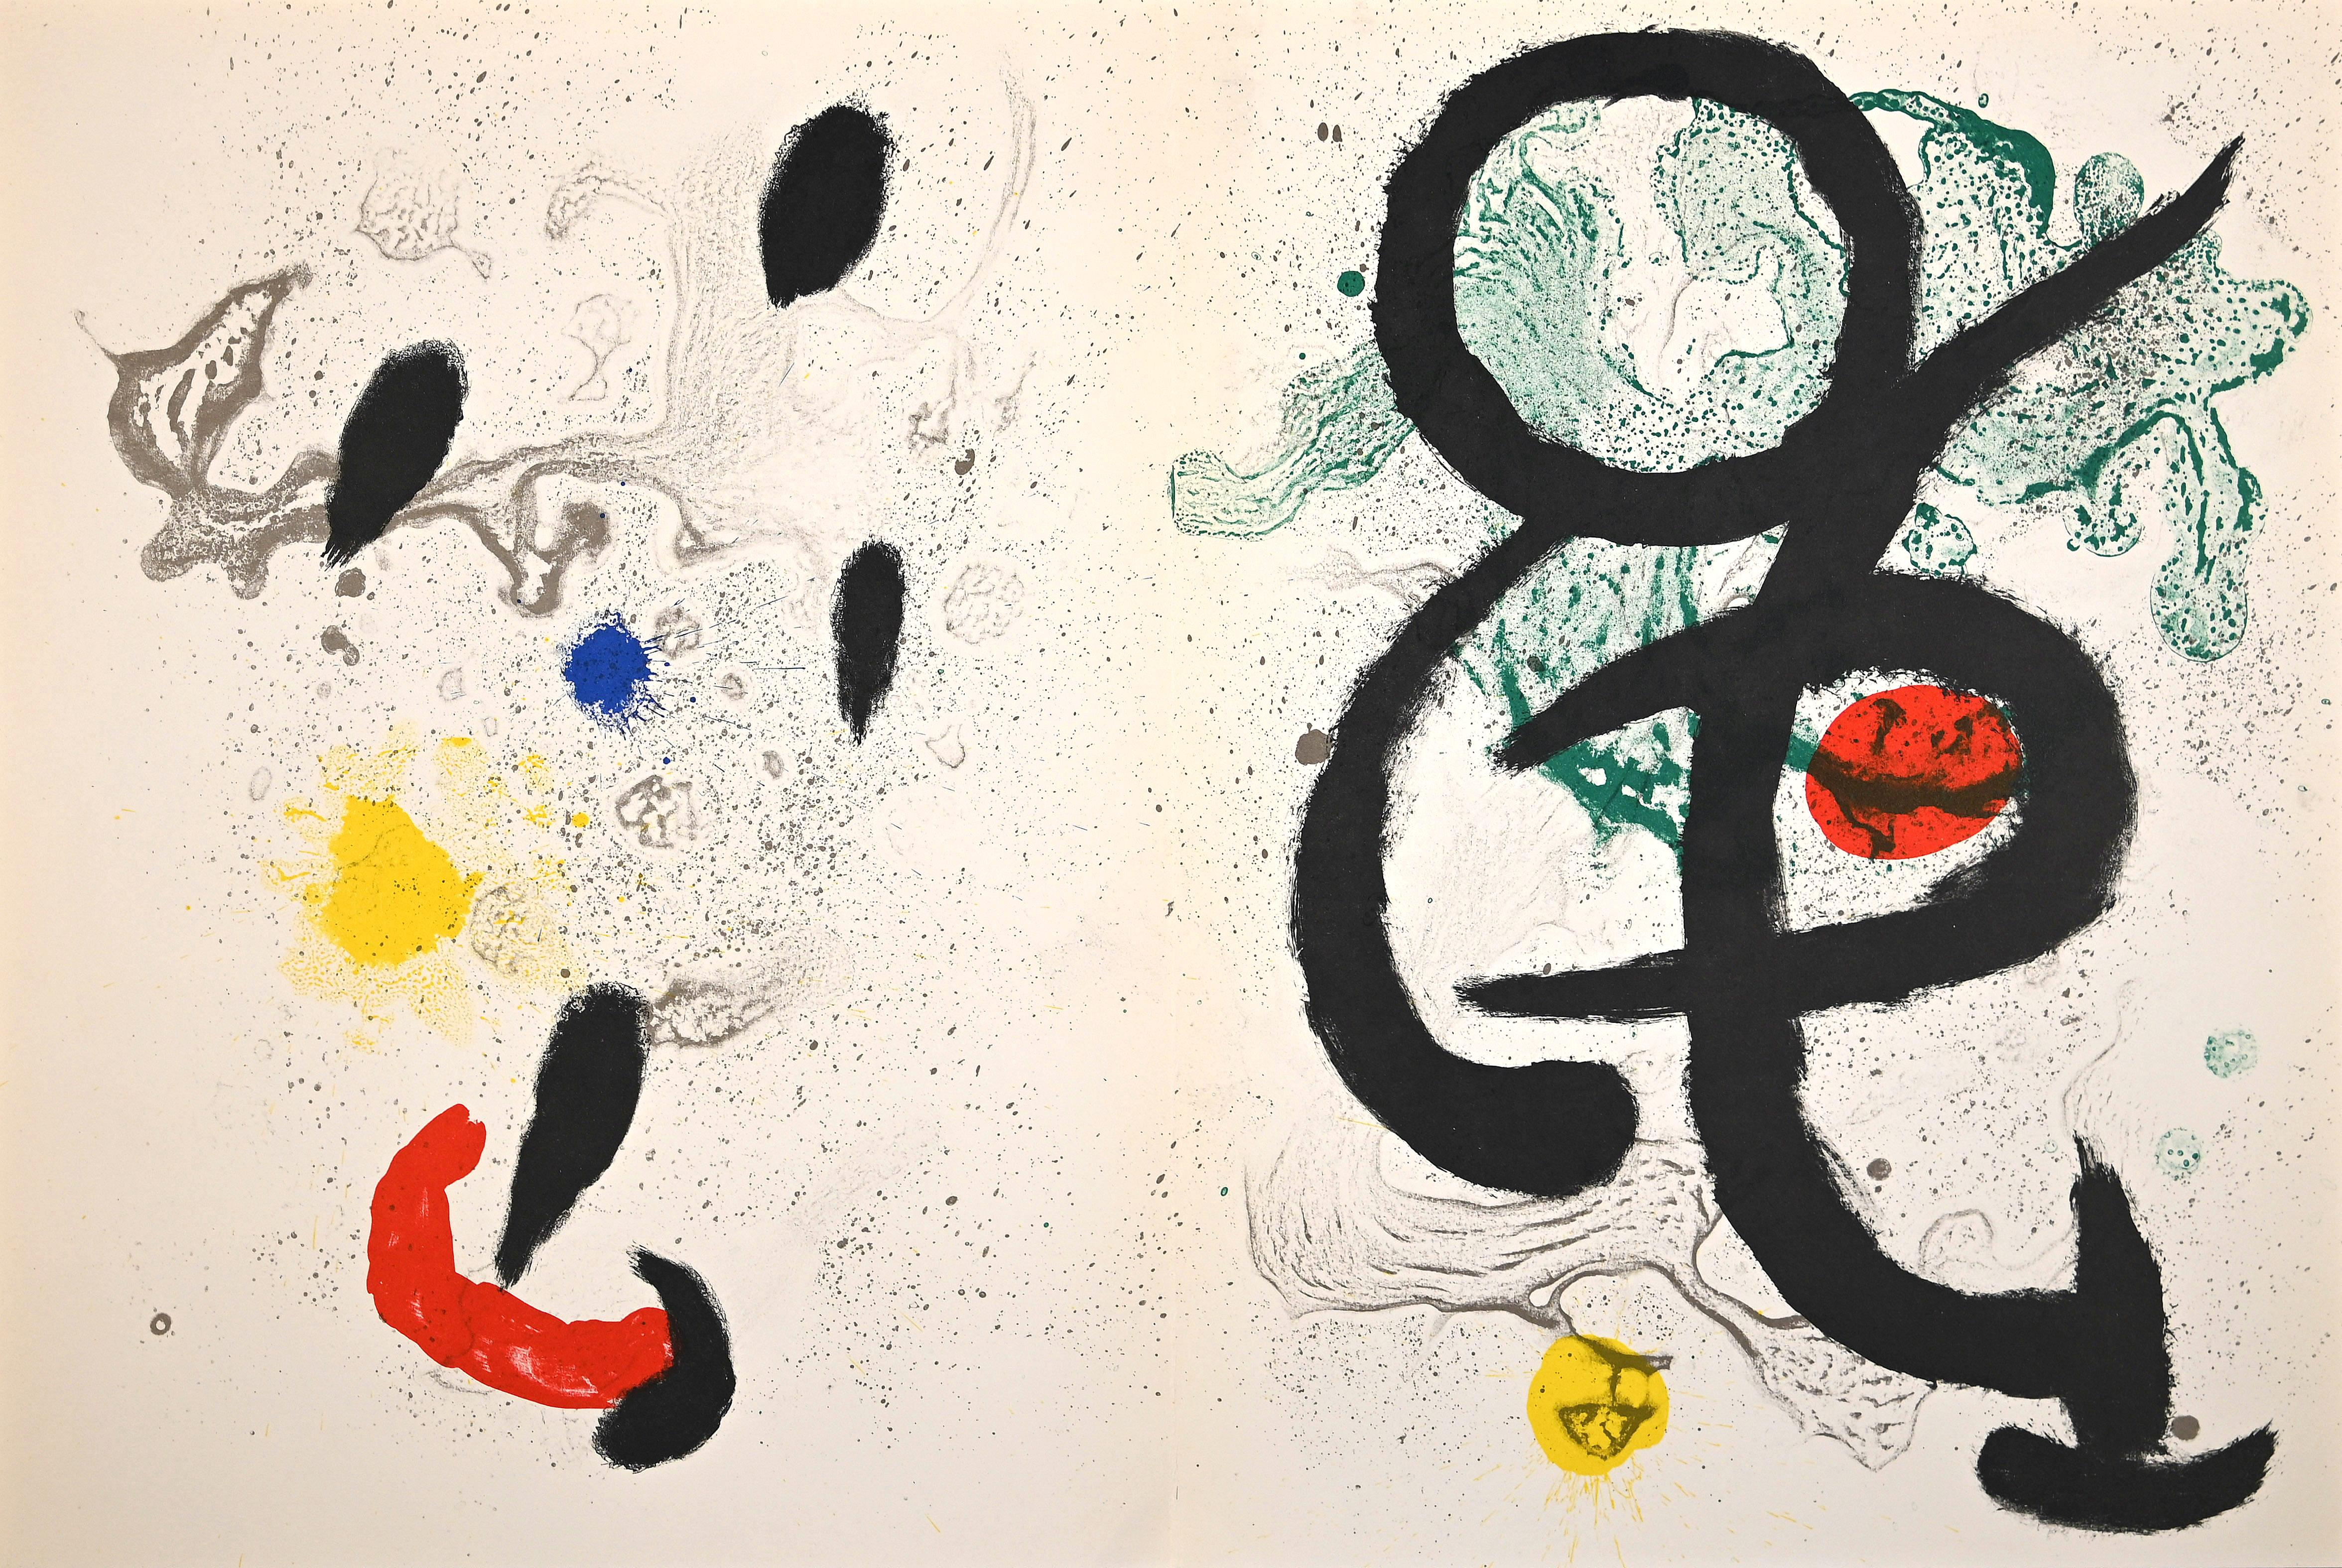 Joan Miró Abstract Print - Danse Barbare - Original Lithograph by Joan Mirò - 1963